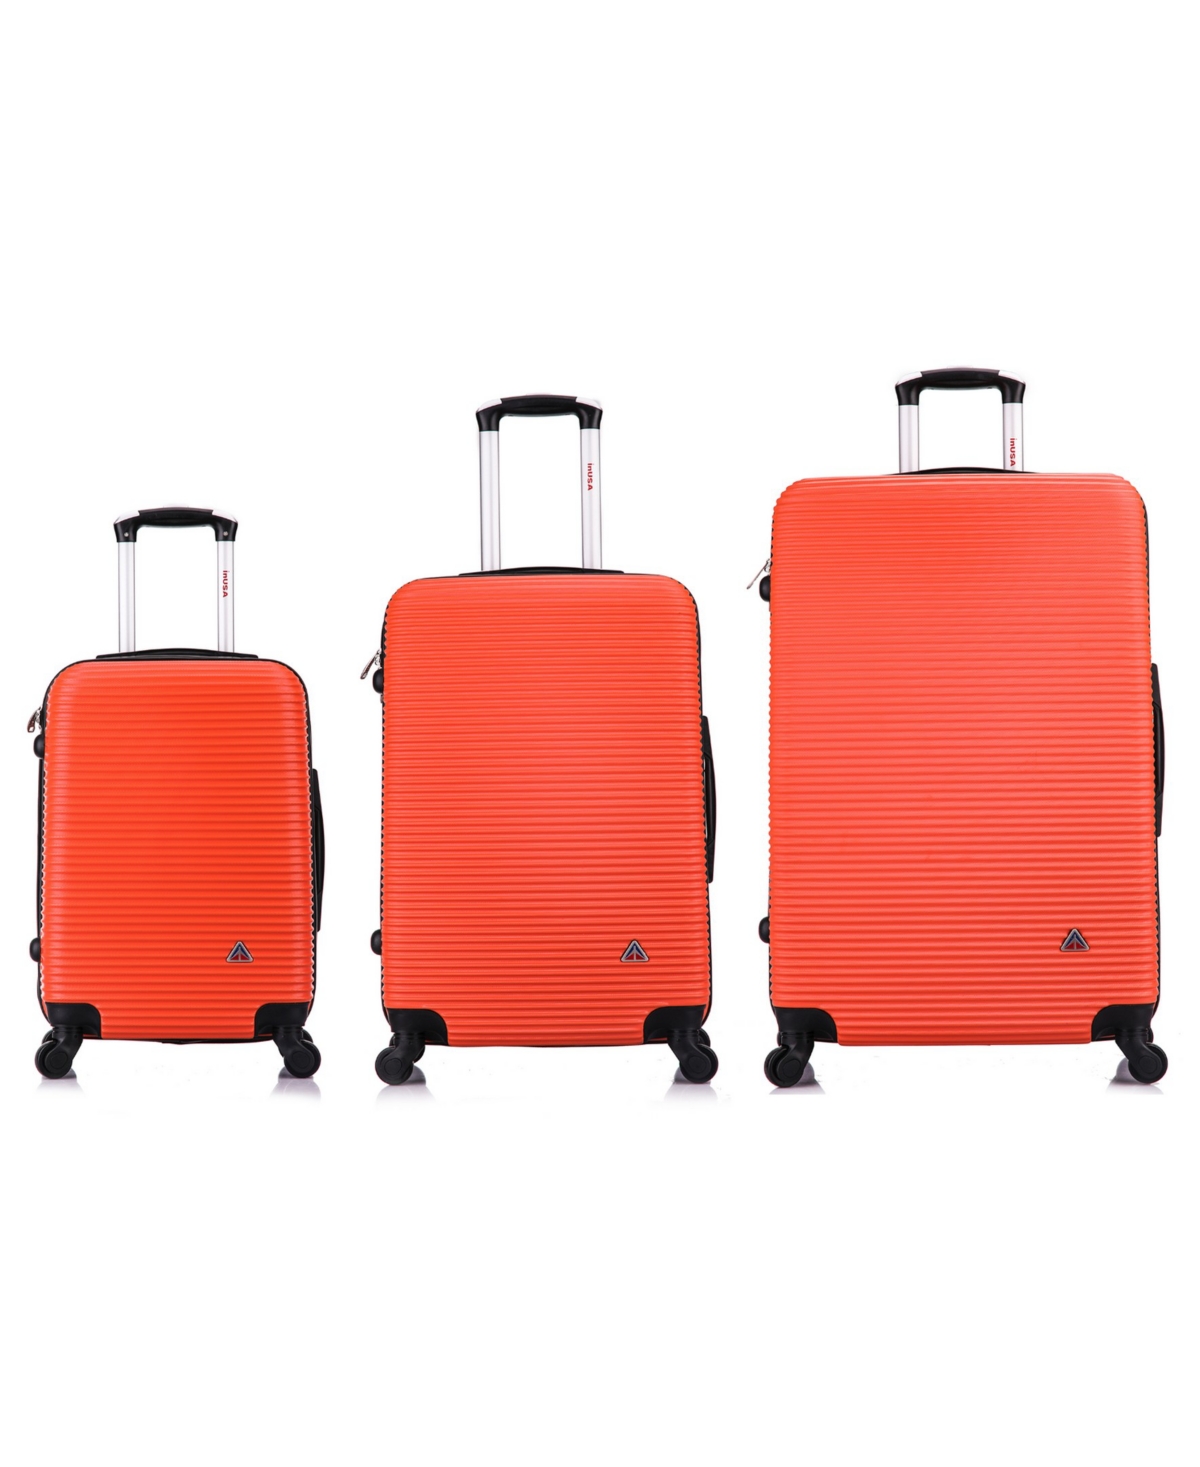 Royal 3-Pc. Lightweight Hardside Spinner Luggage Set - Orange